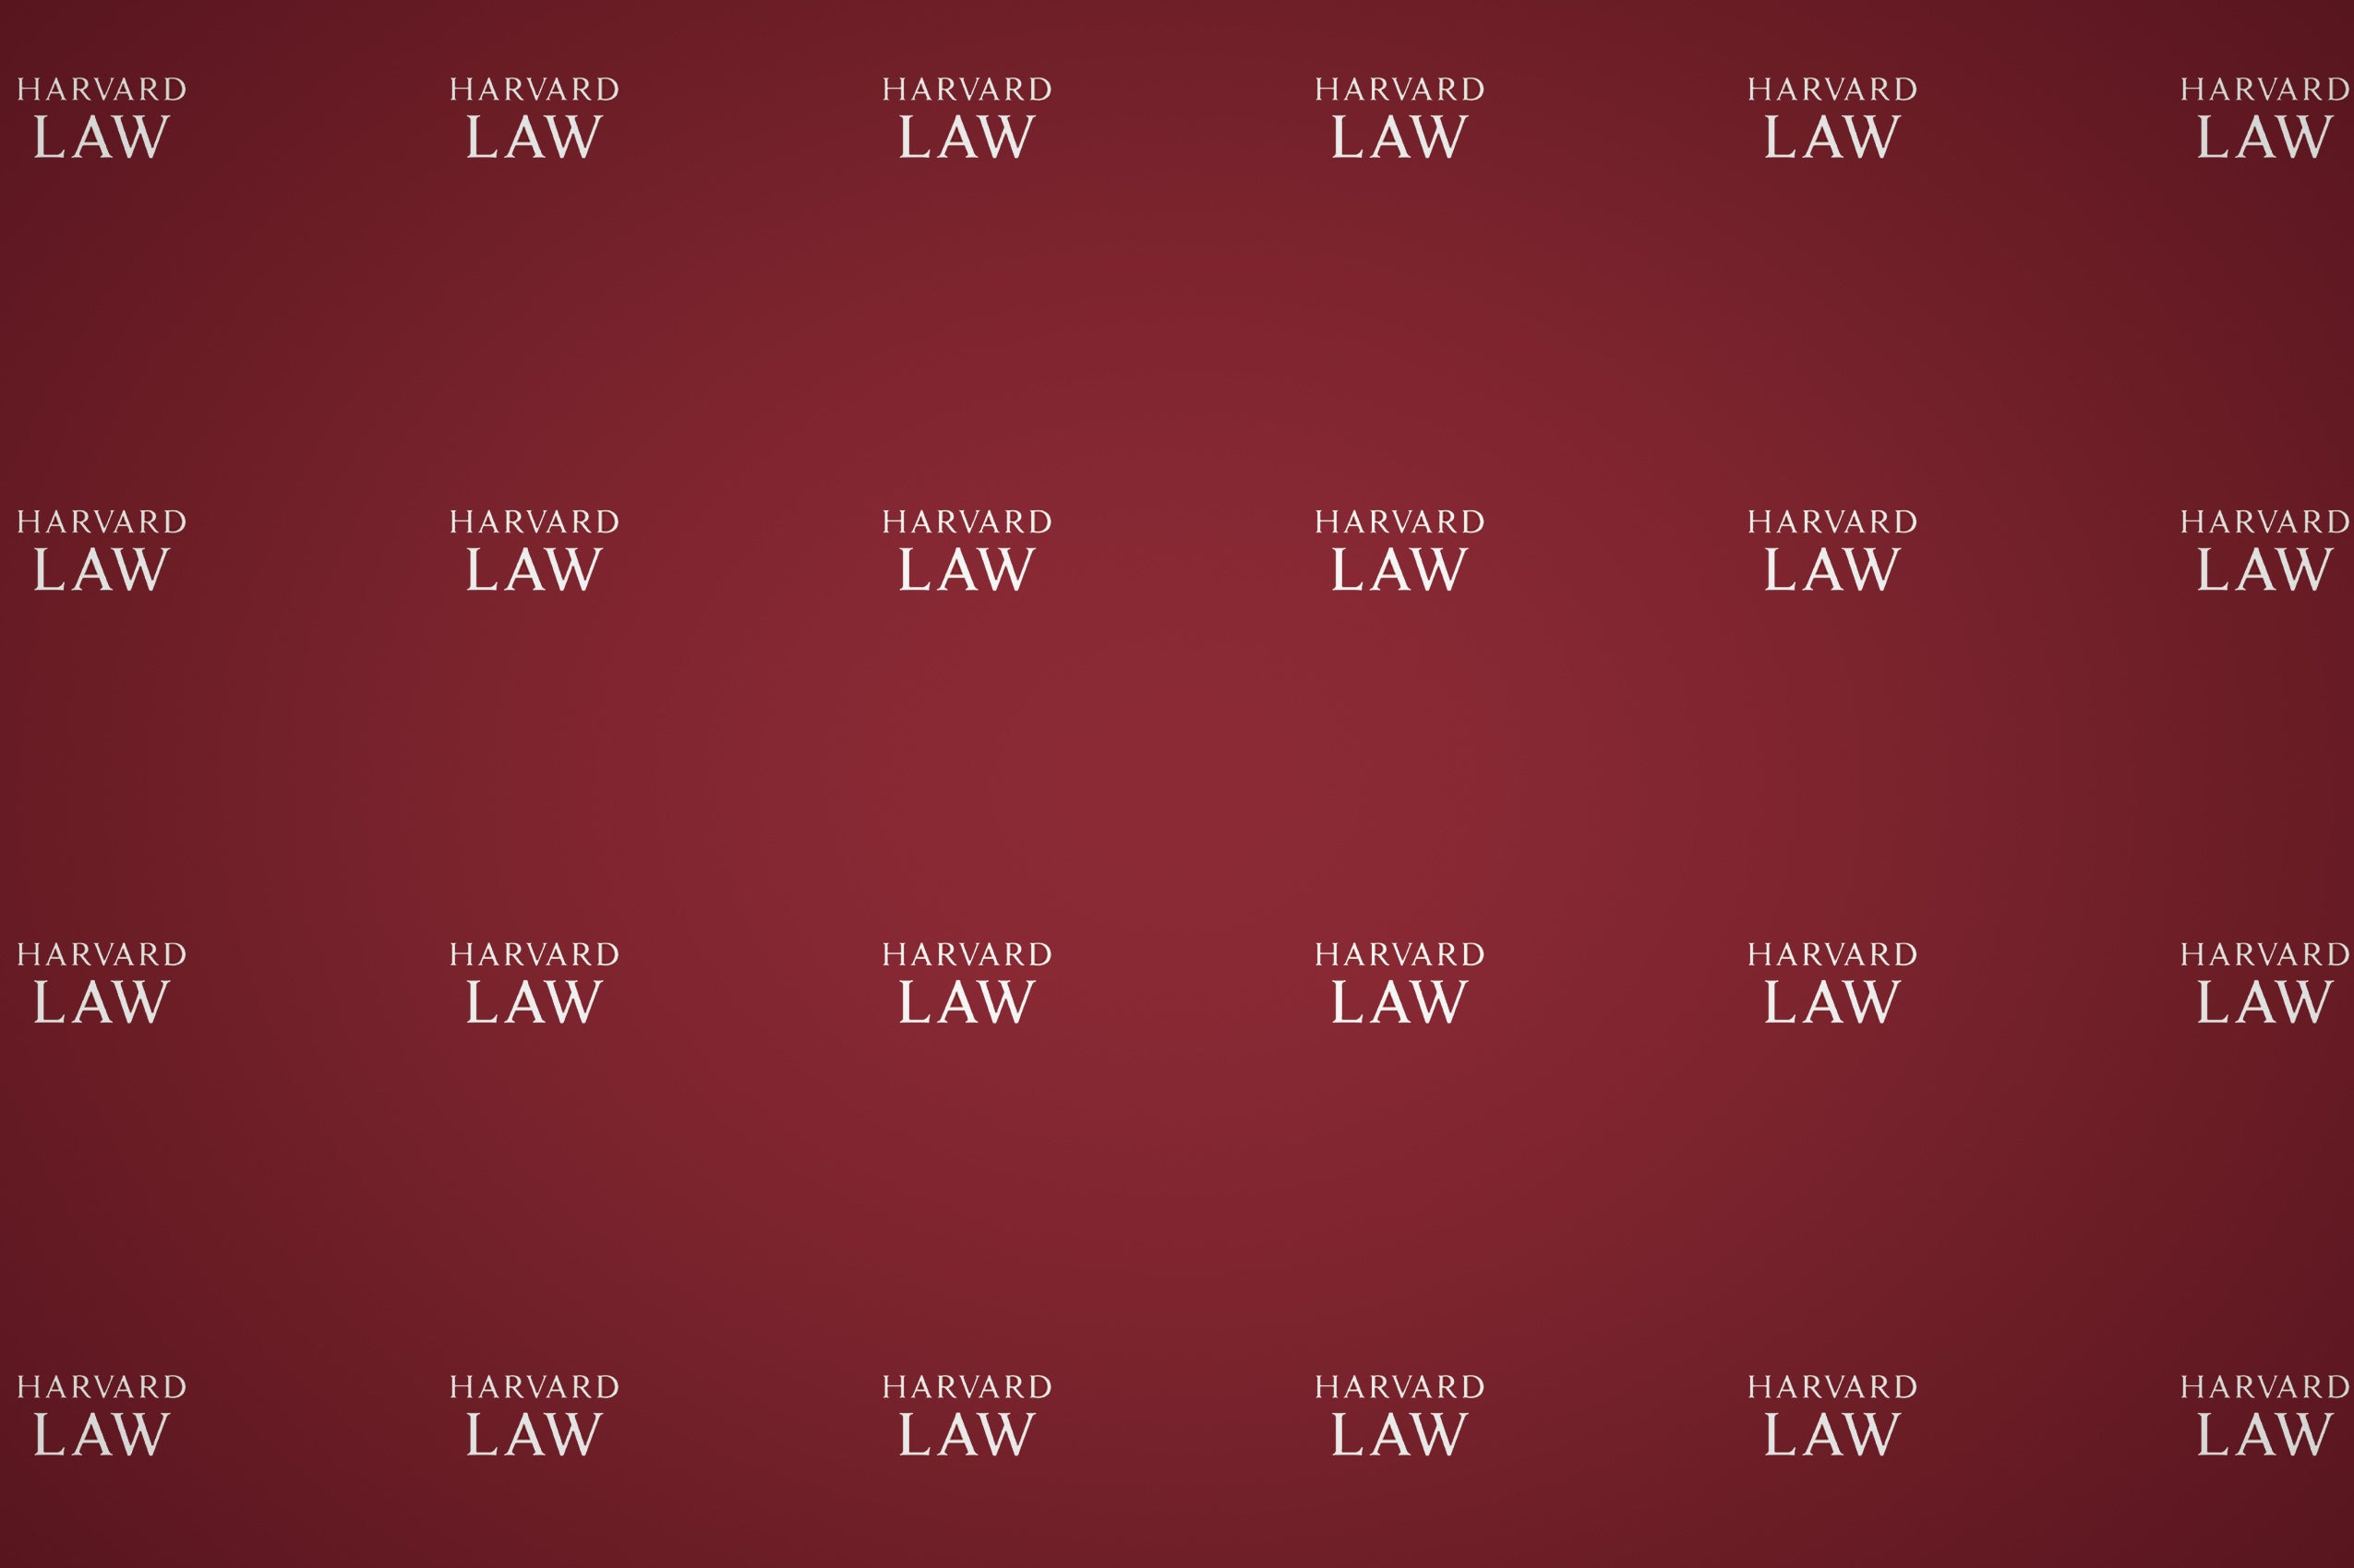 Harvard Law tiled background